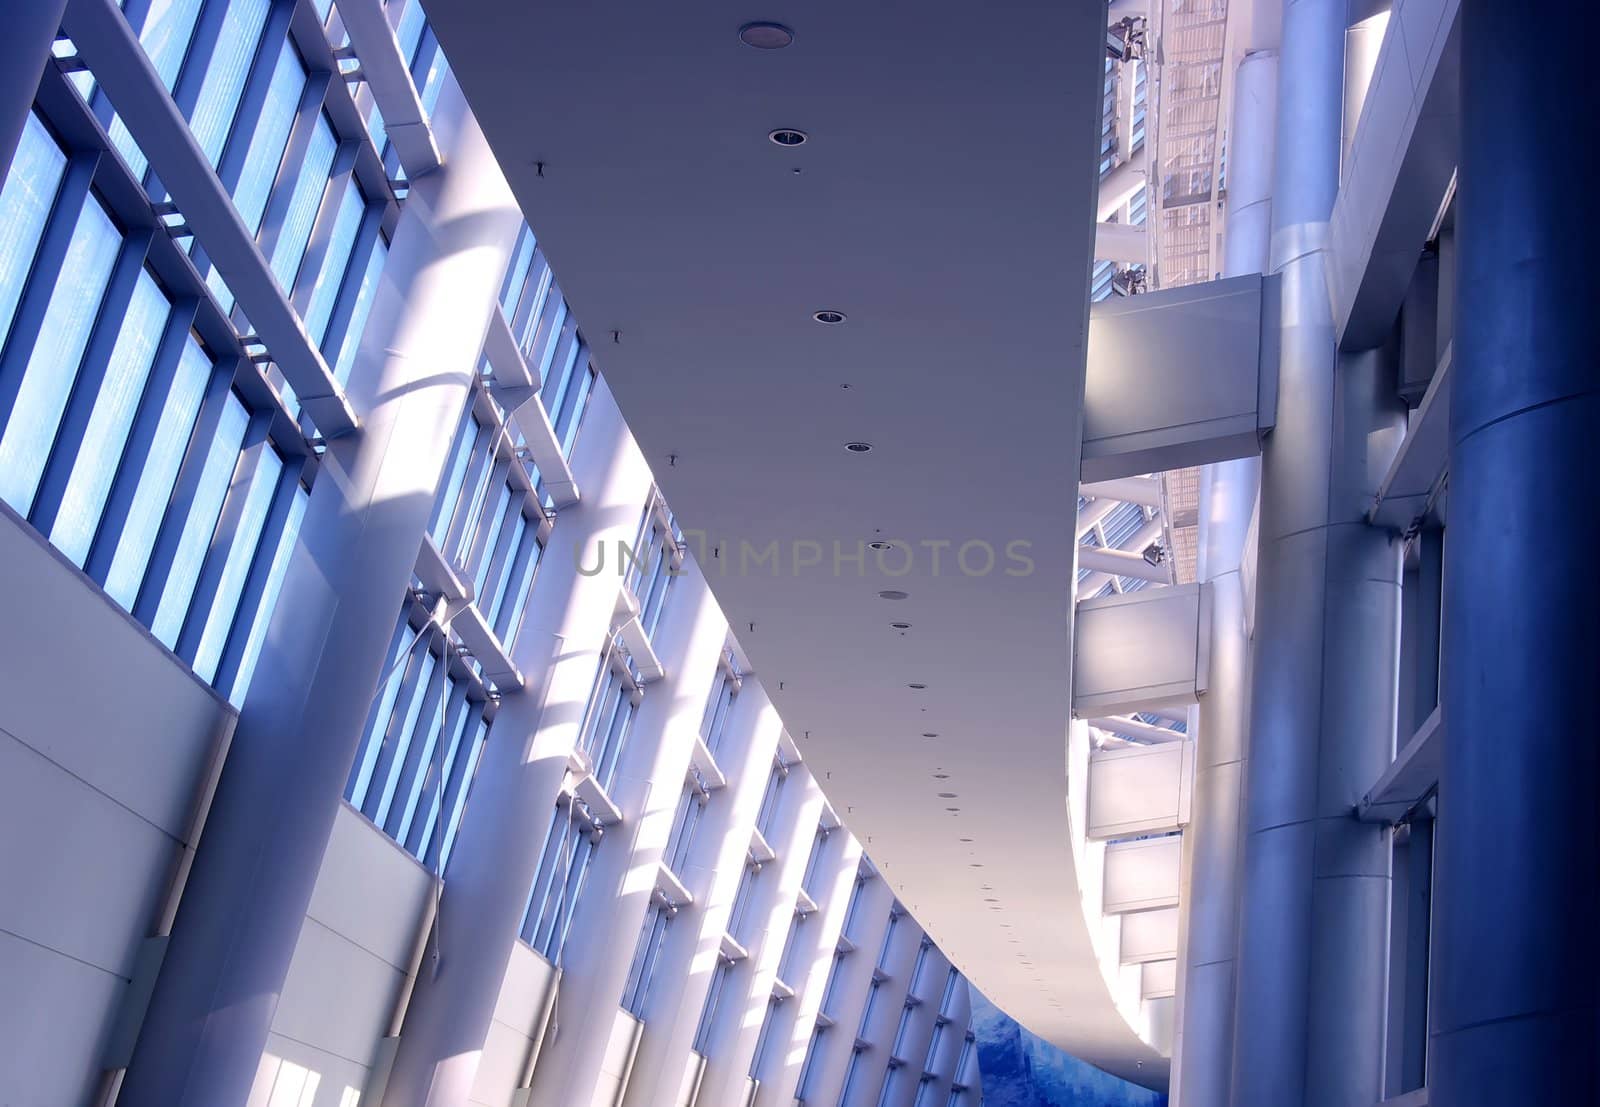 Futuristic Building-Interior horizontal by clickbeetle